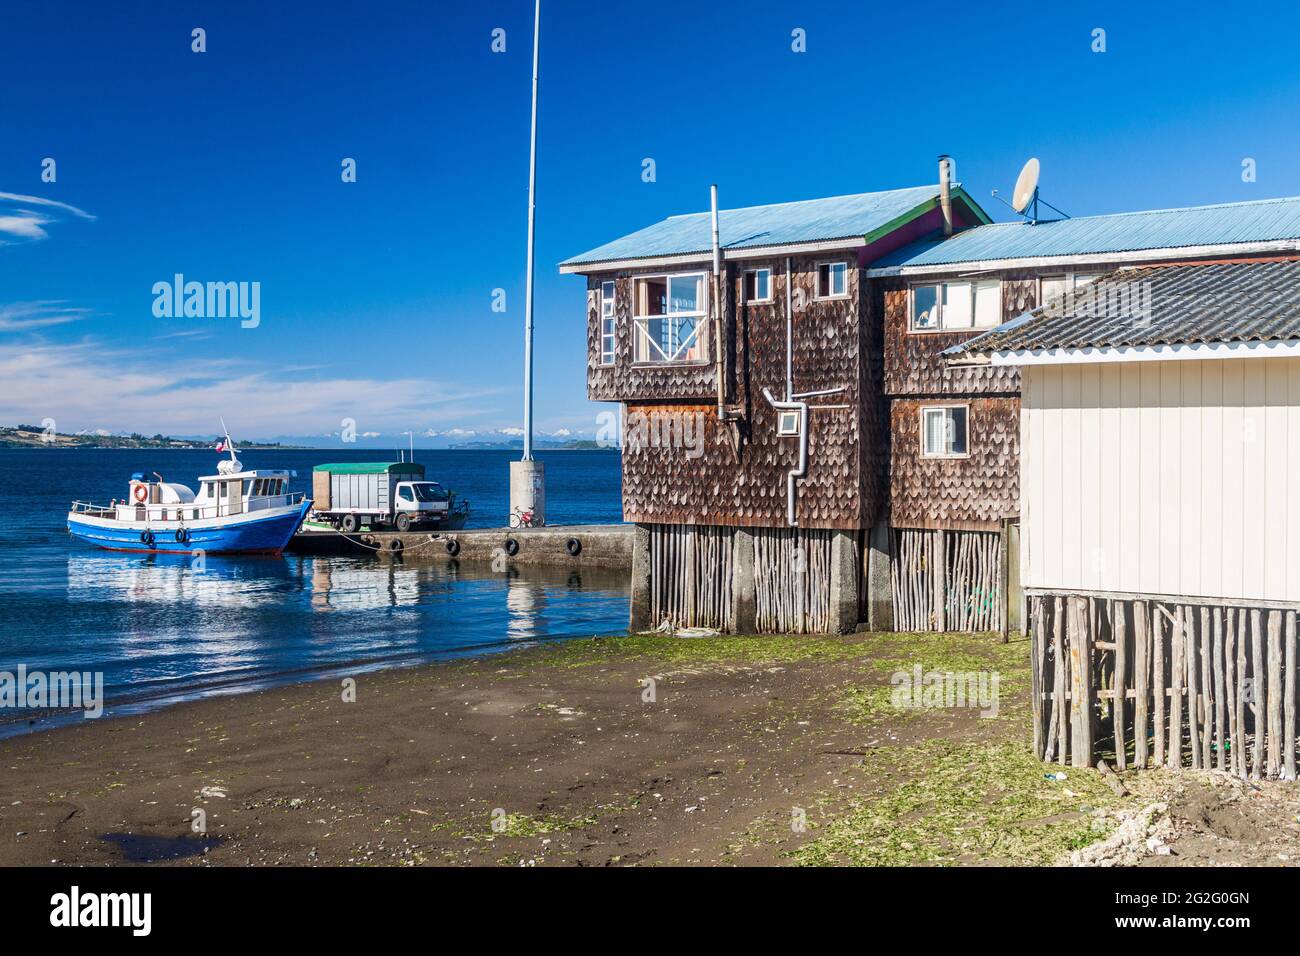 Boats in Achao village, Quinchao island, Chile Stock Photo